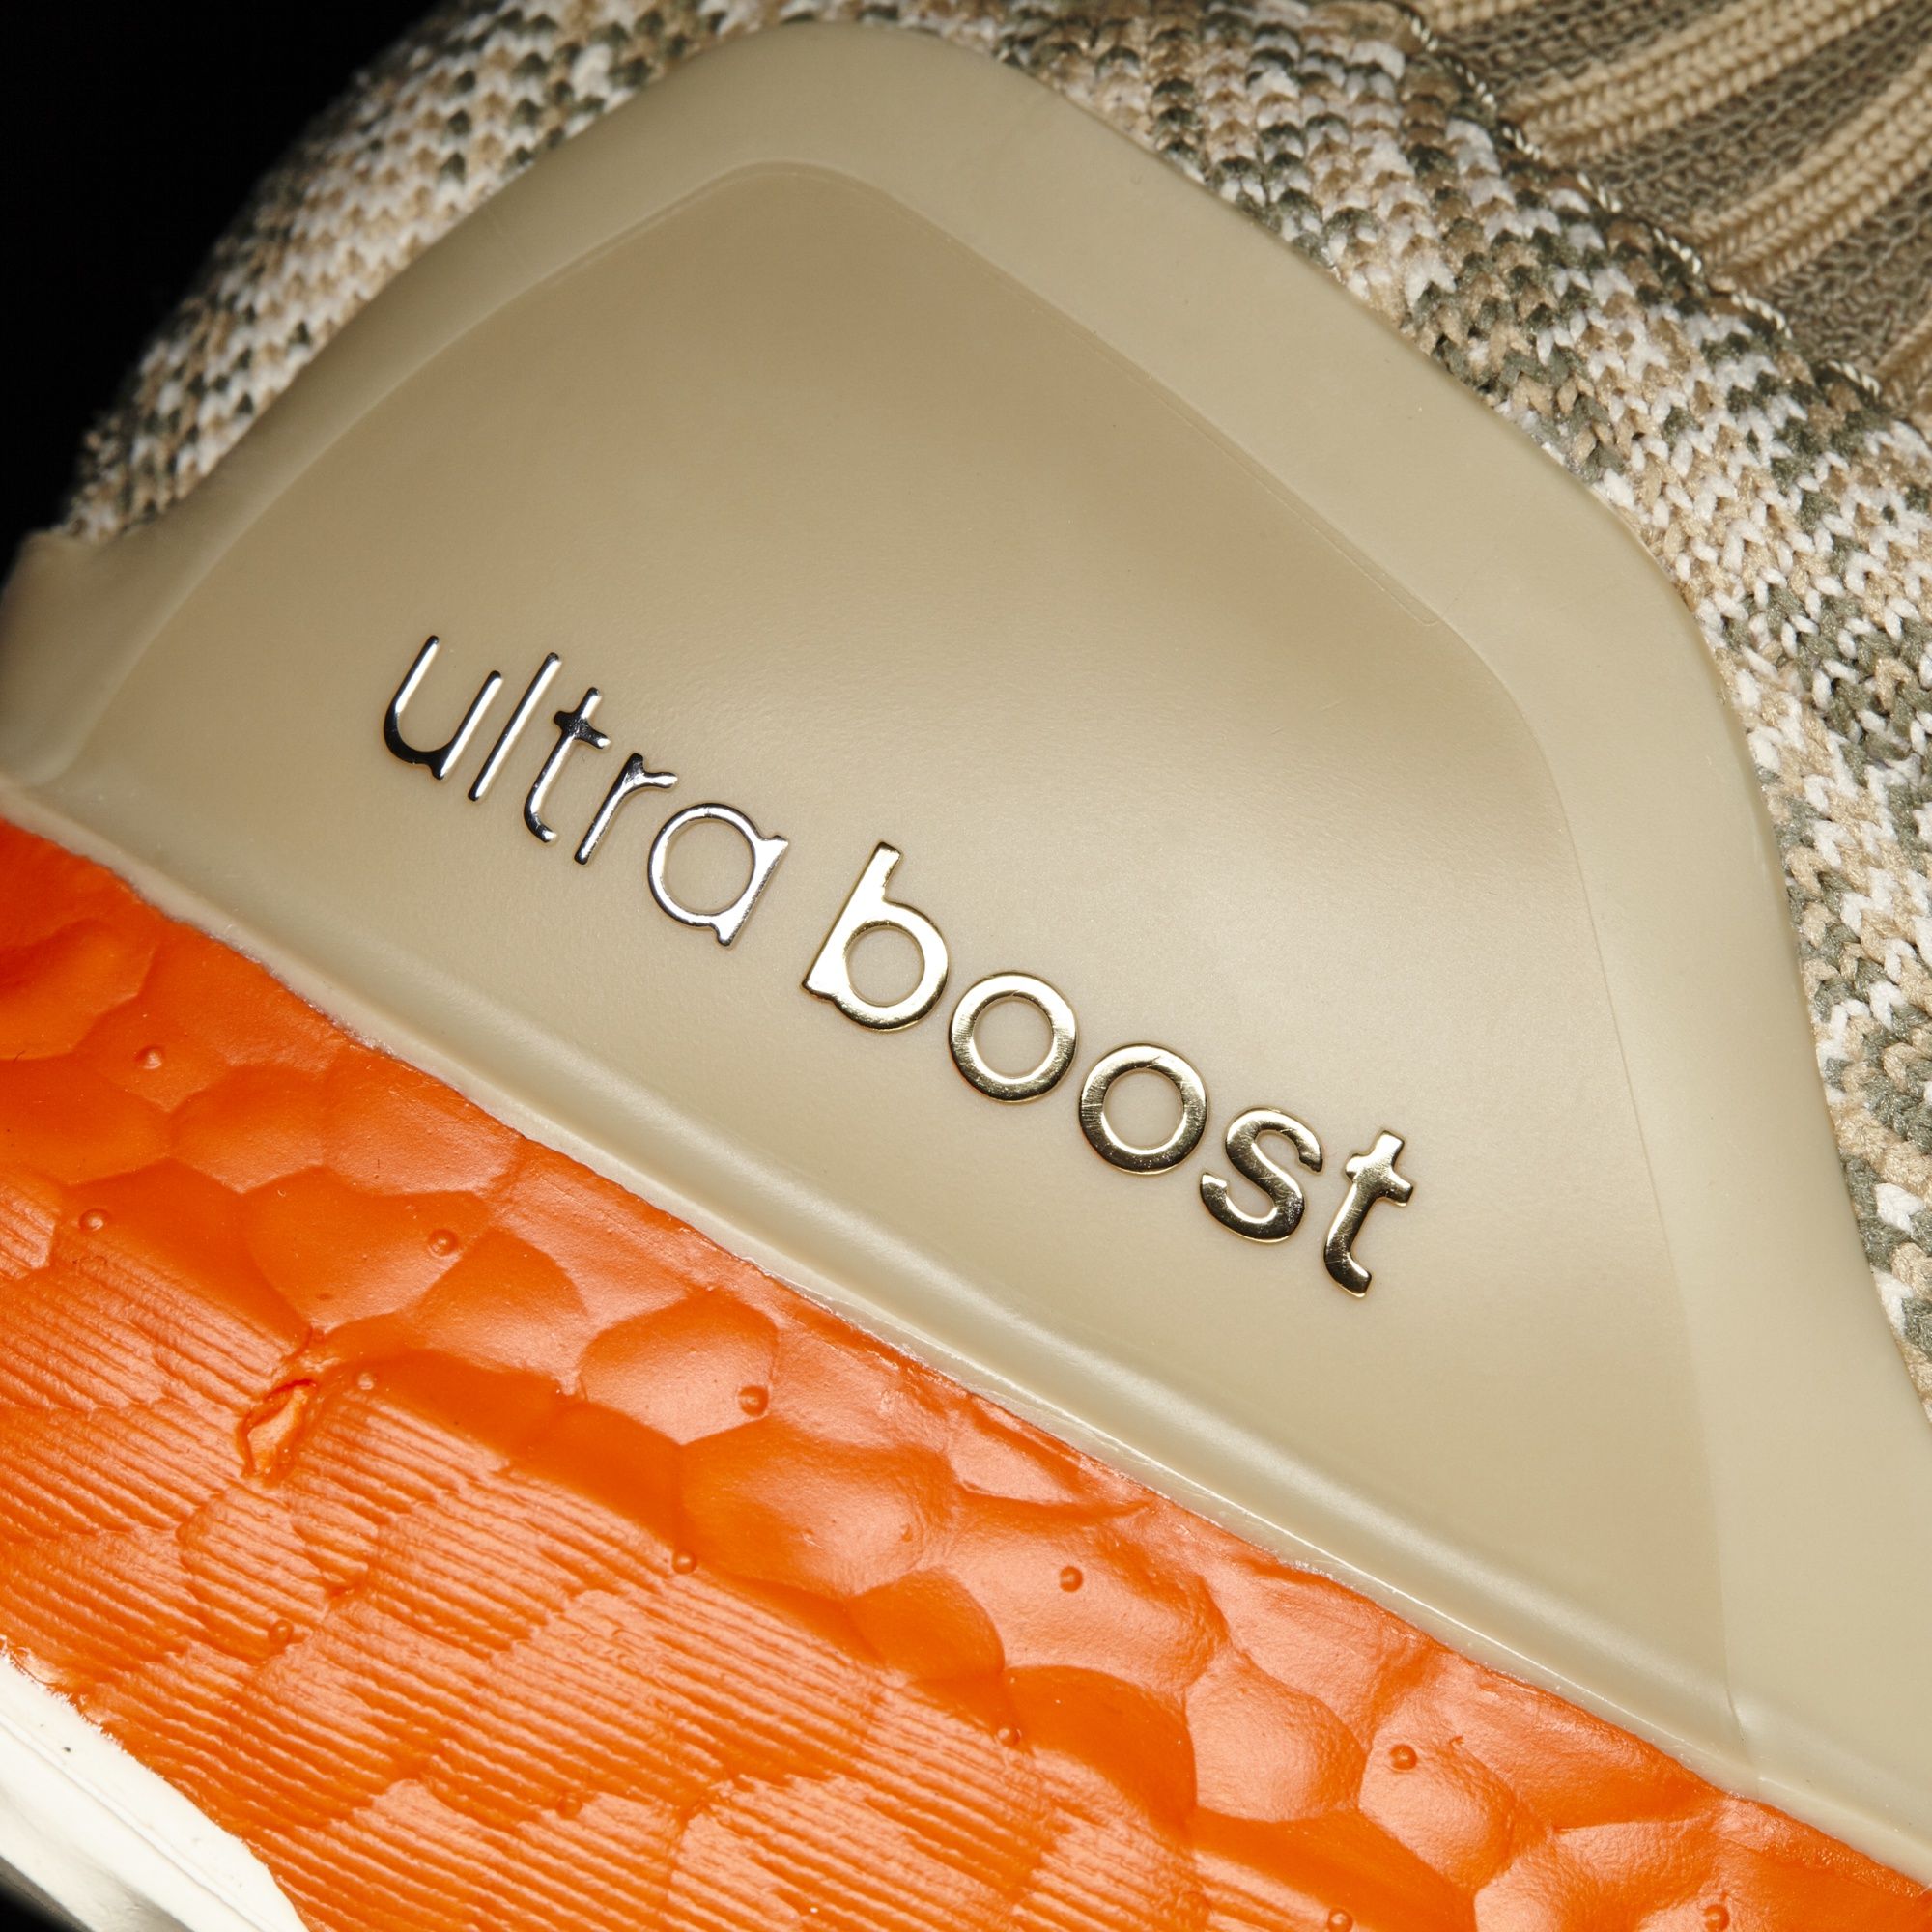 Adidas Ultra Boost Uncaged
« Linen Khaki »